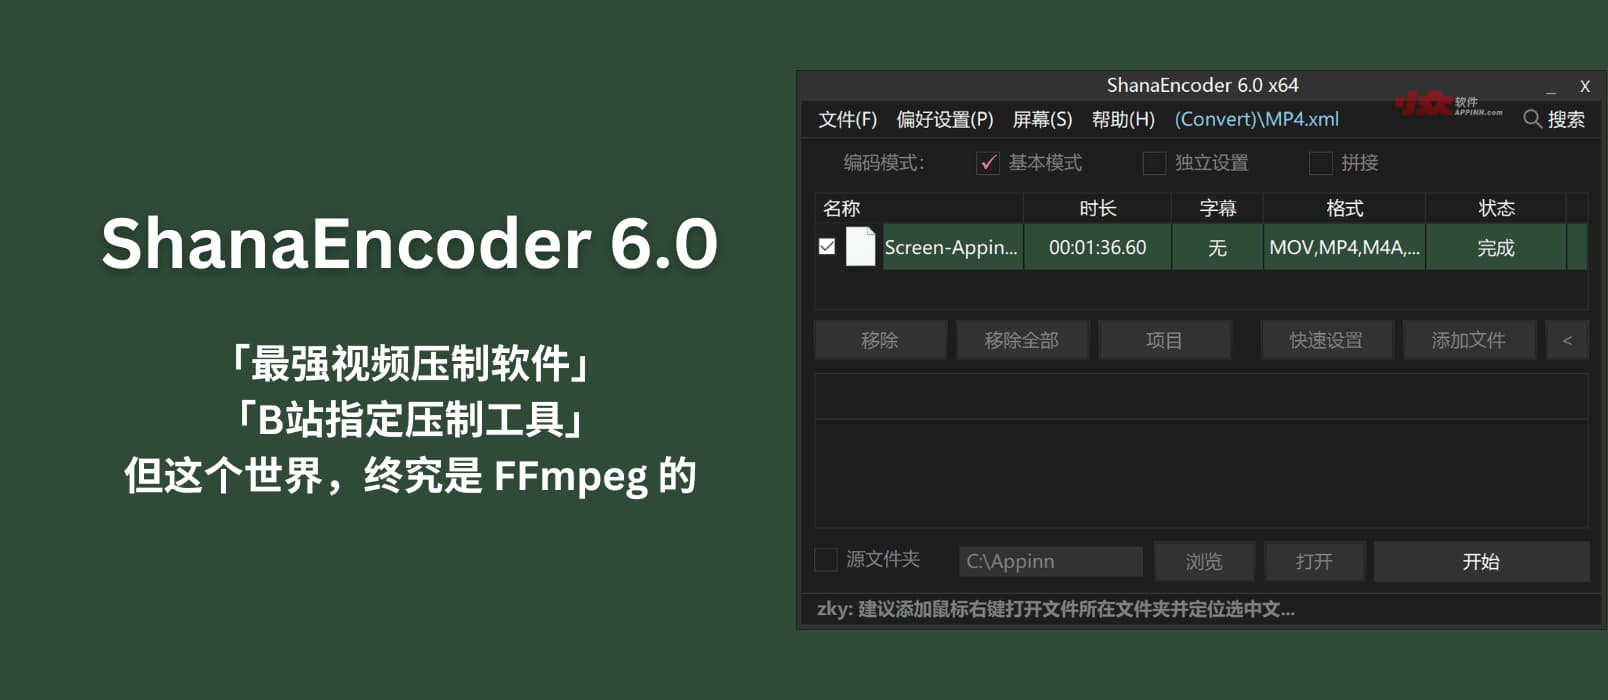 ShanaEncoder 6.0 - 「最强视频压制软件」「B站指定压制工具」｜但这个世界，终究是 FFmpeg 的